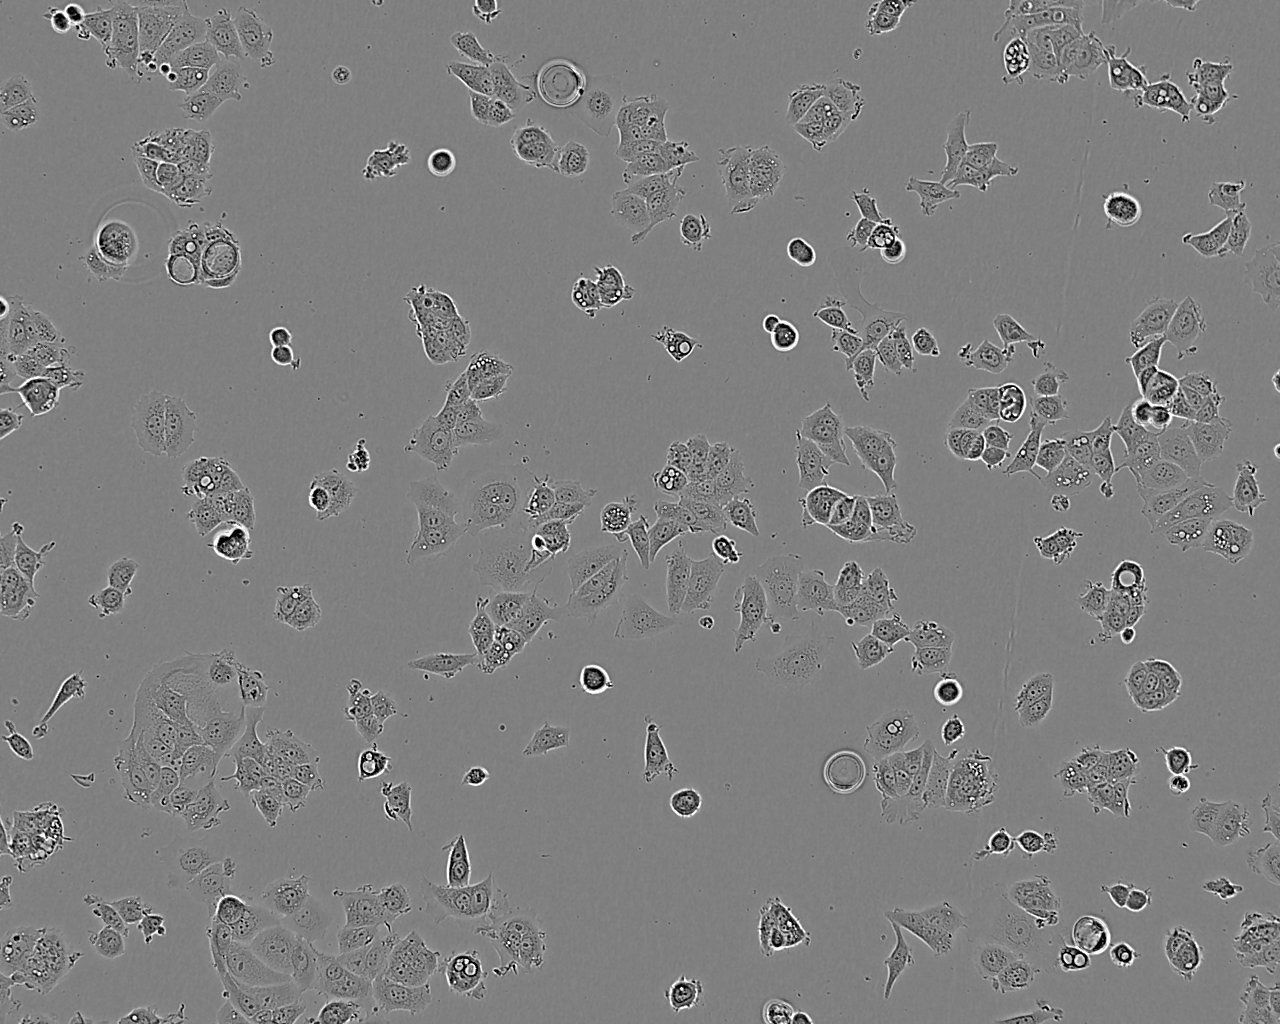 293AD epithelioid cells人胚肾细胞系,293AD epithelioid cells